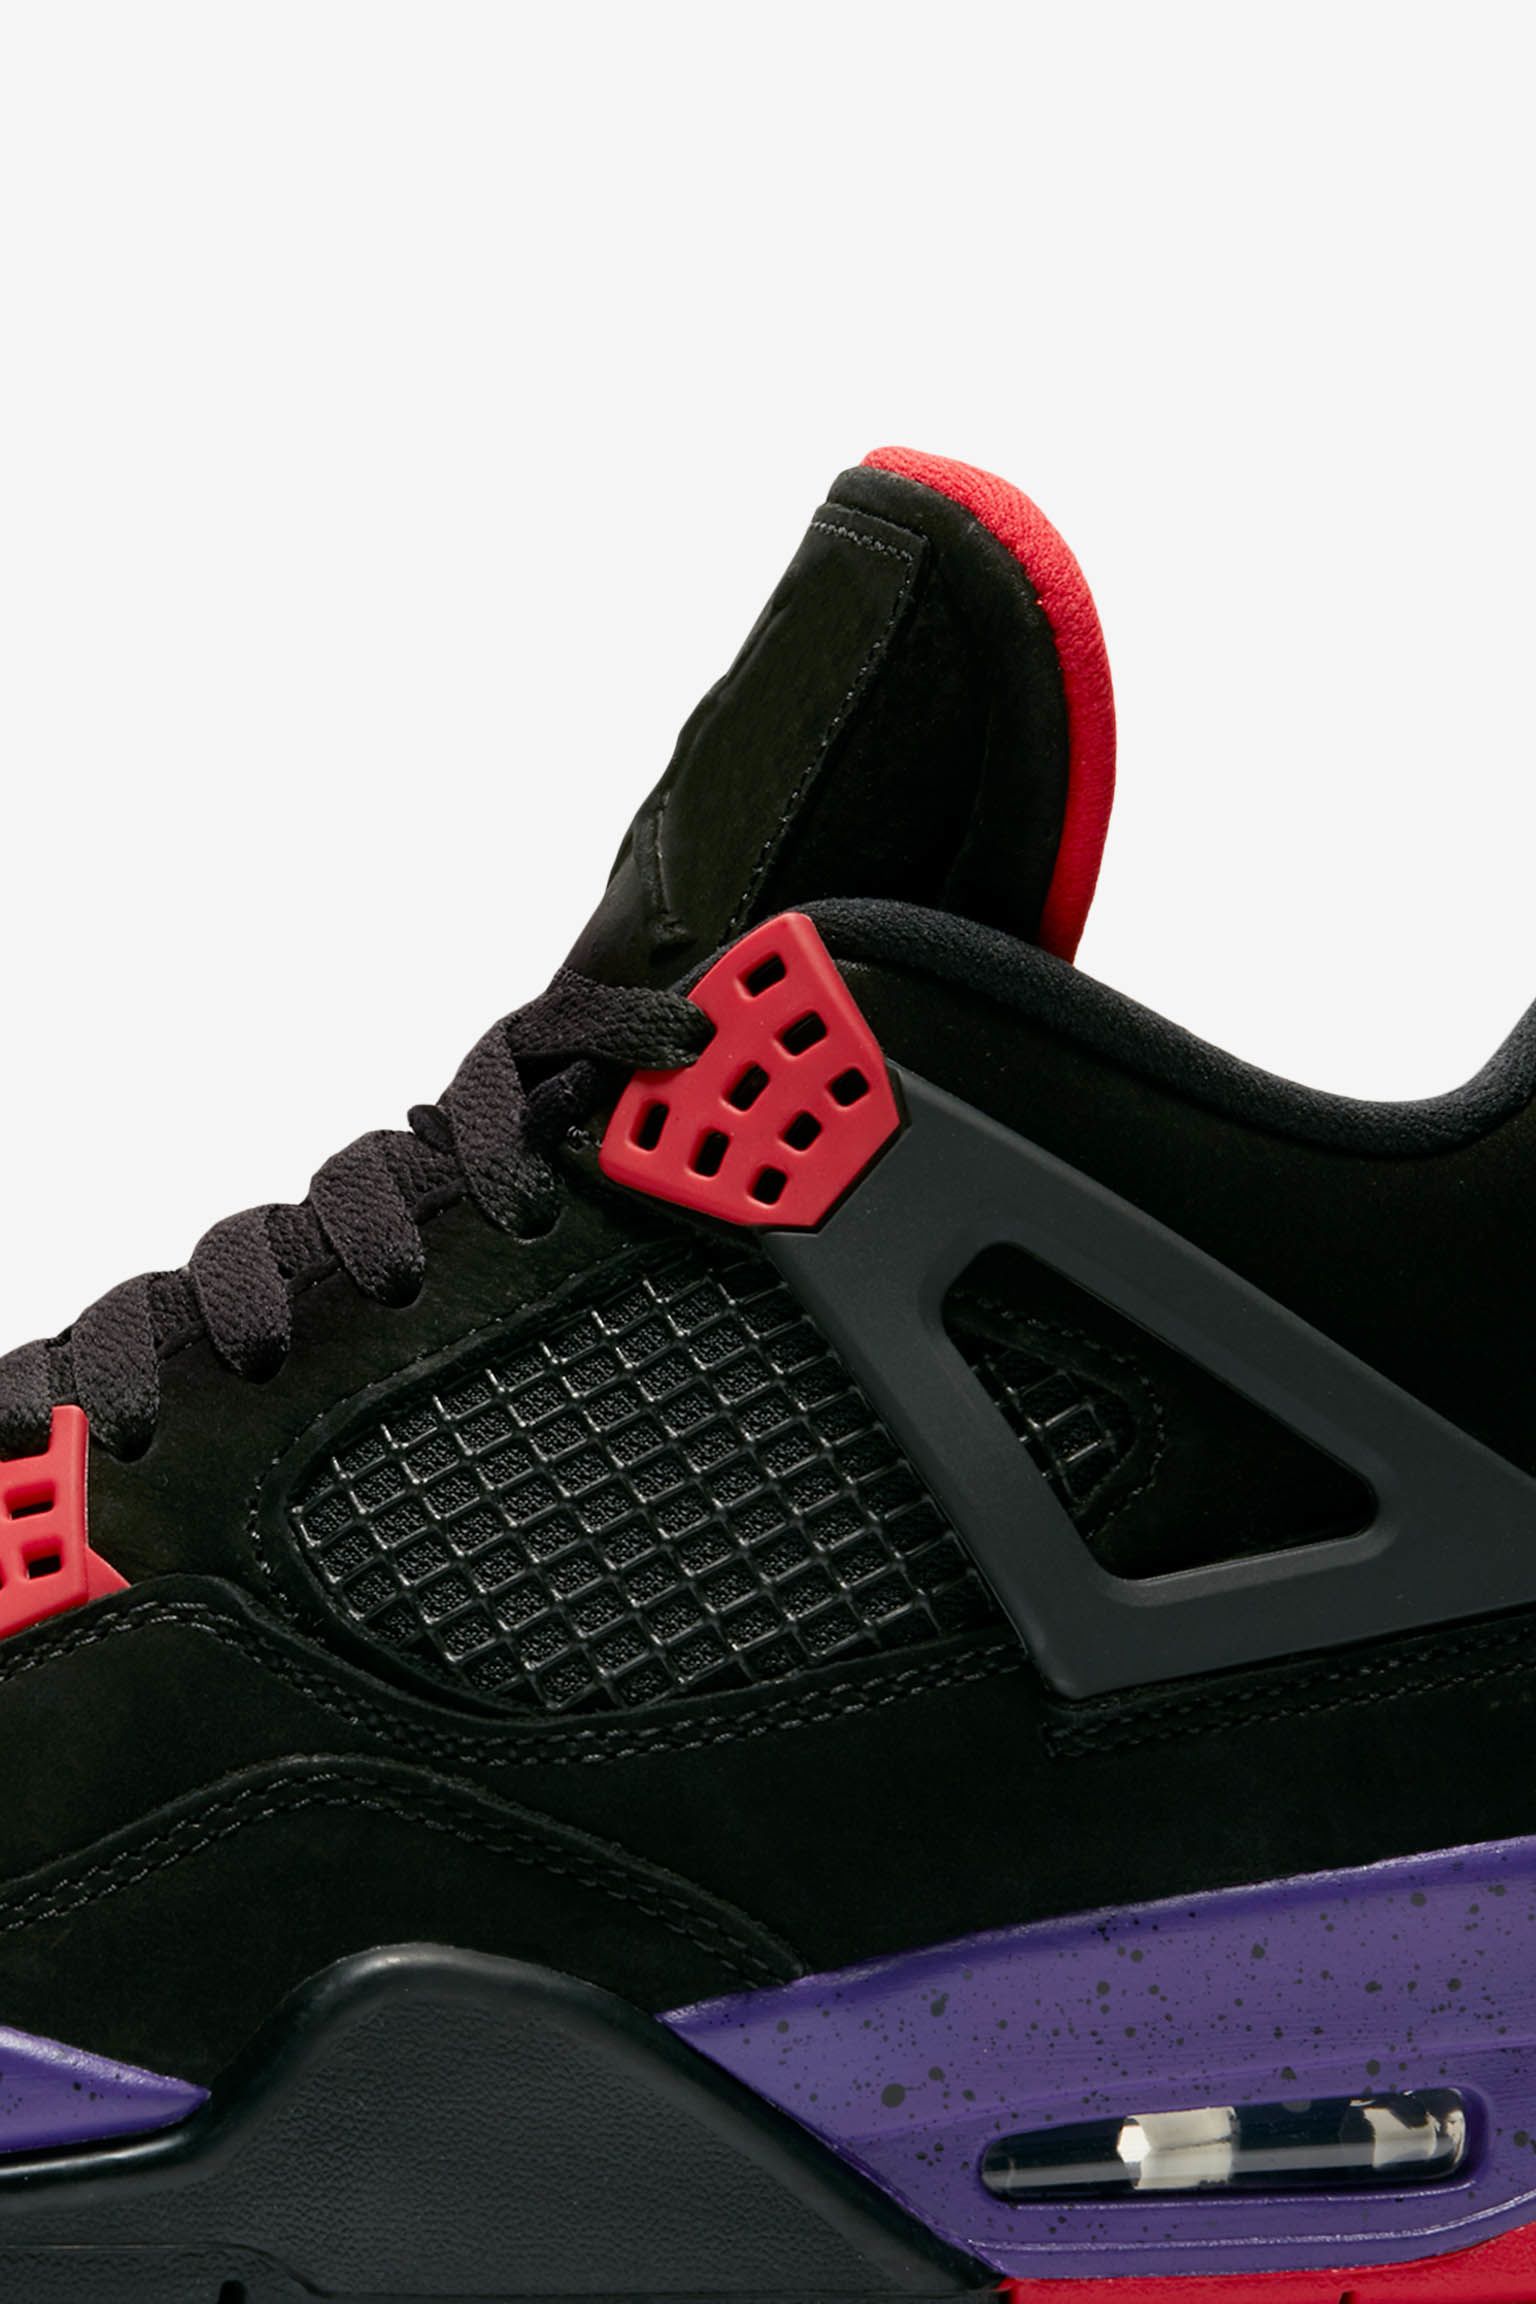 Air Jordan 4 'Black & Court Purple' Release Date. Nike SNKRS